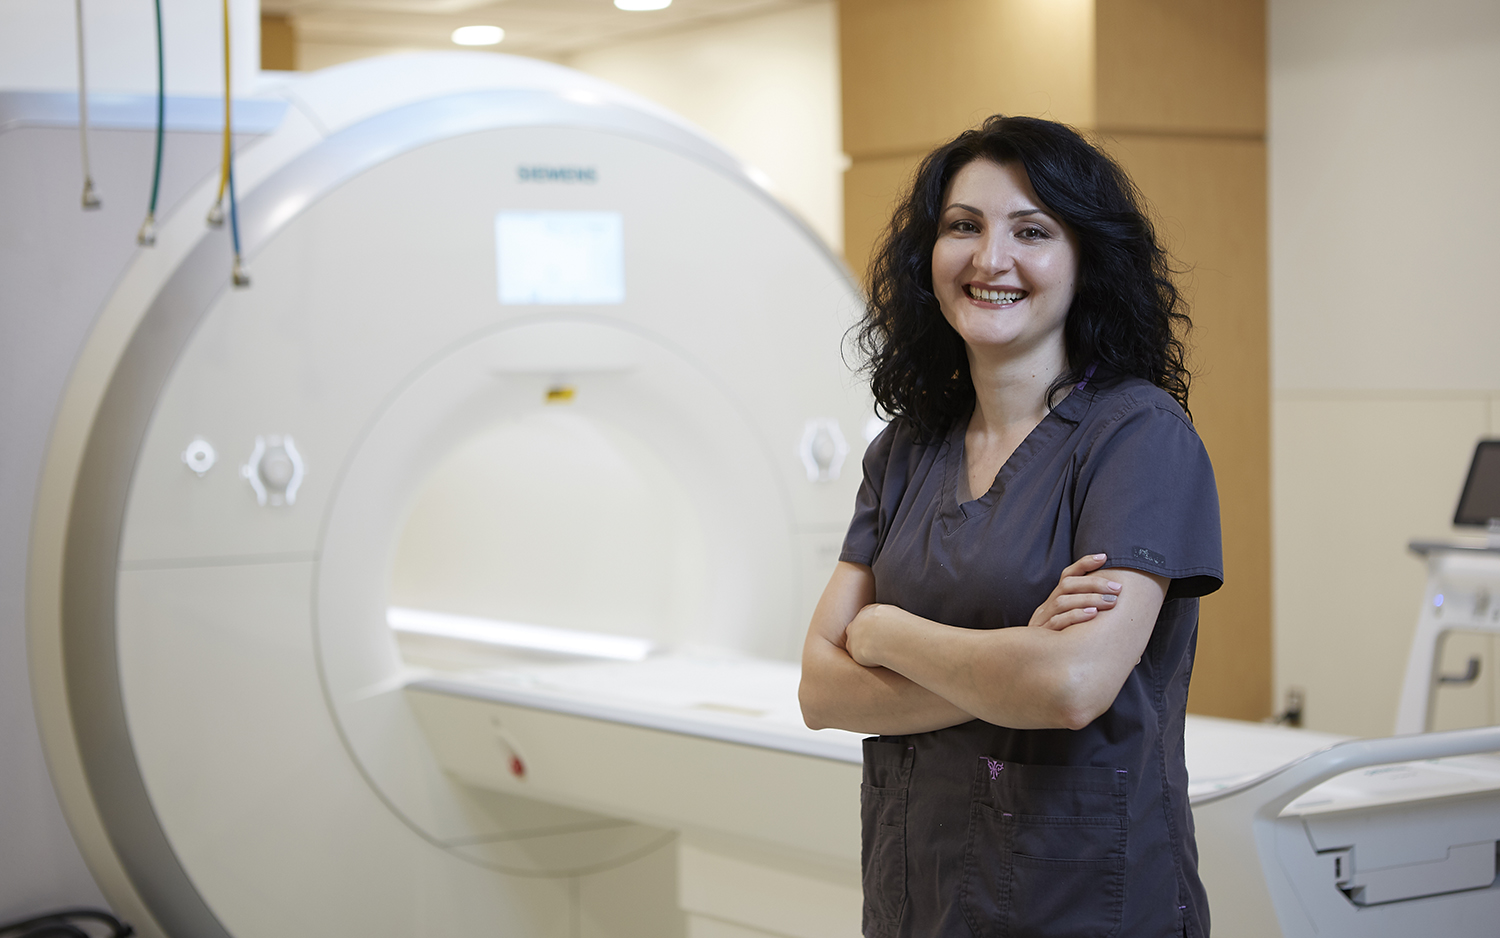 Ilona Shikoiants an MRI Technologist at Cedars-Sinai